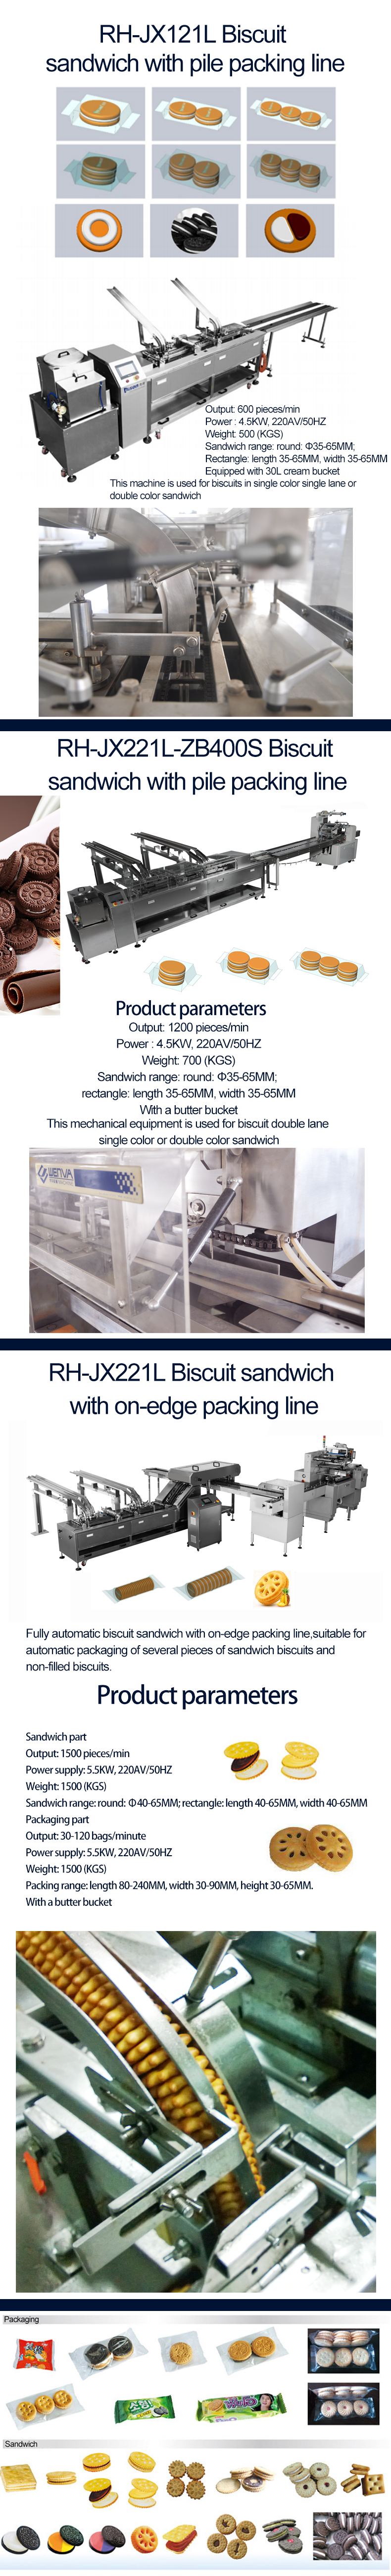 biscuit sandwiching machine(图1)